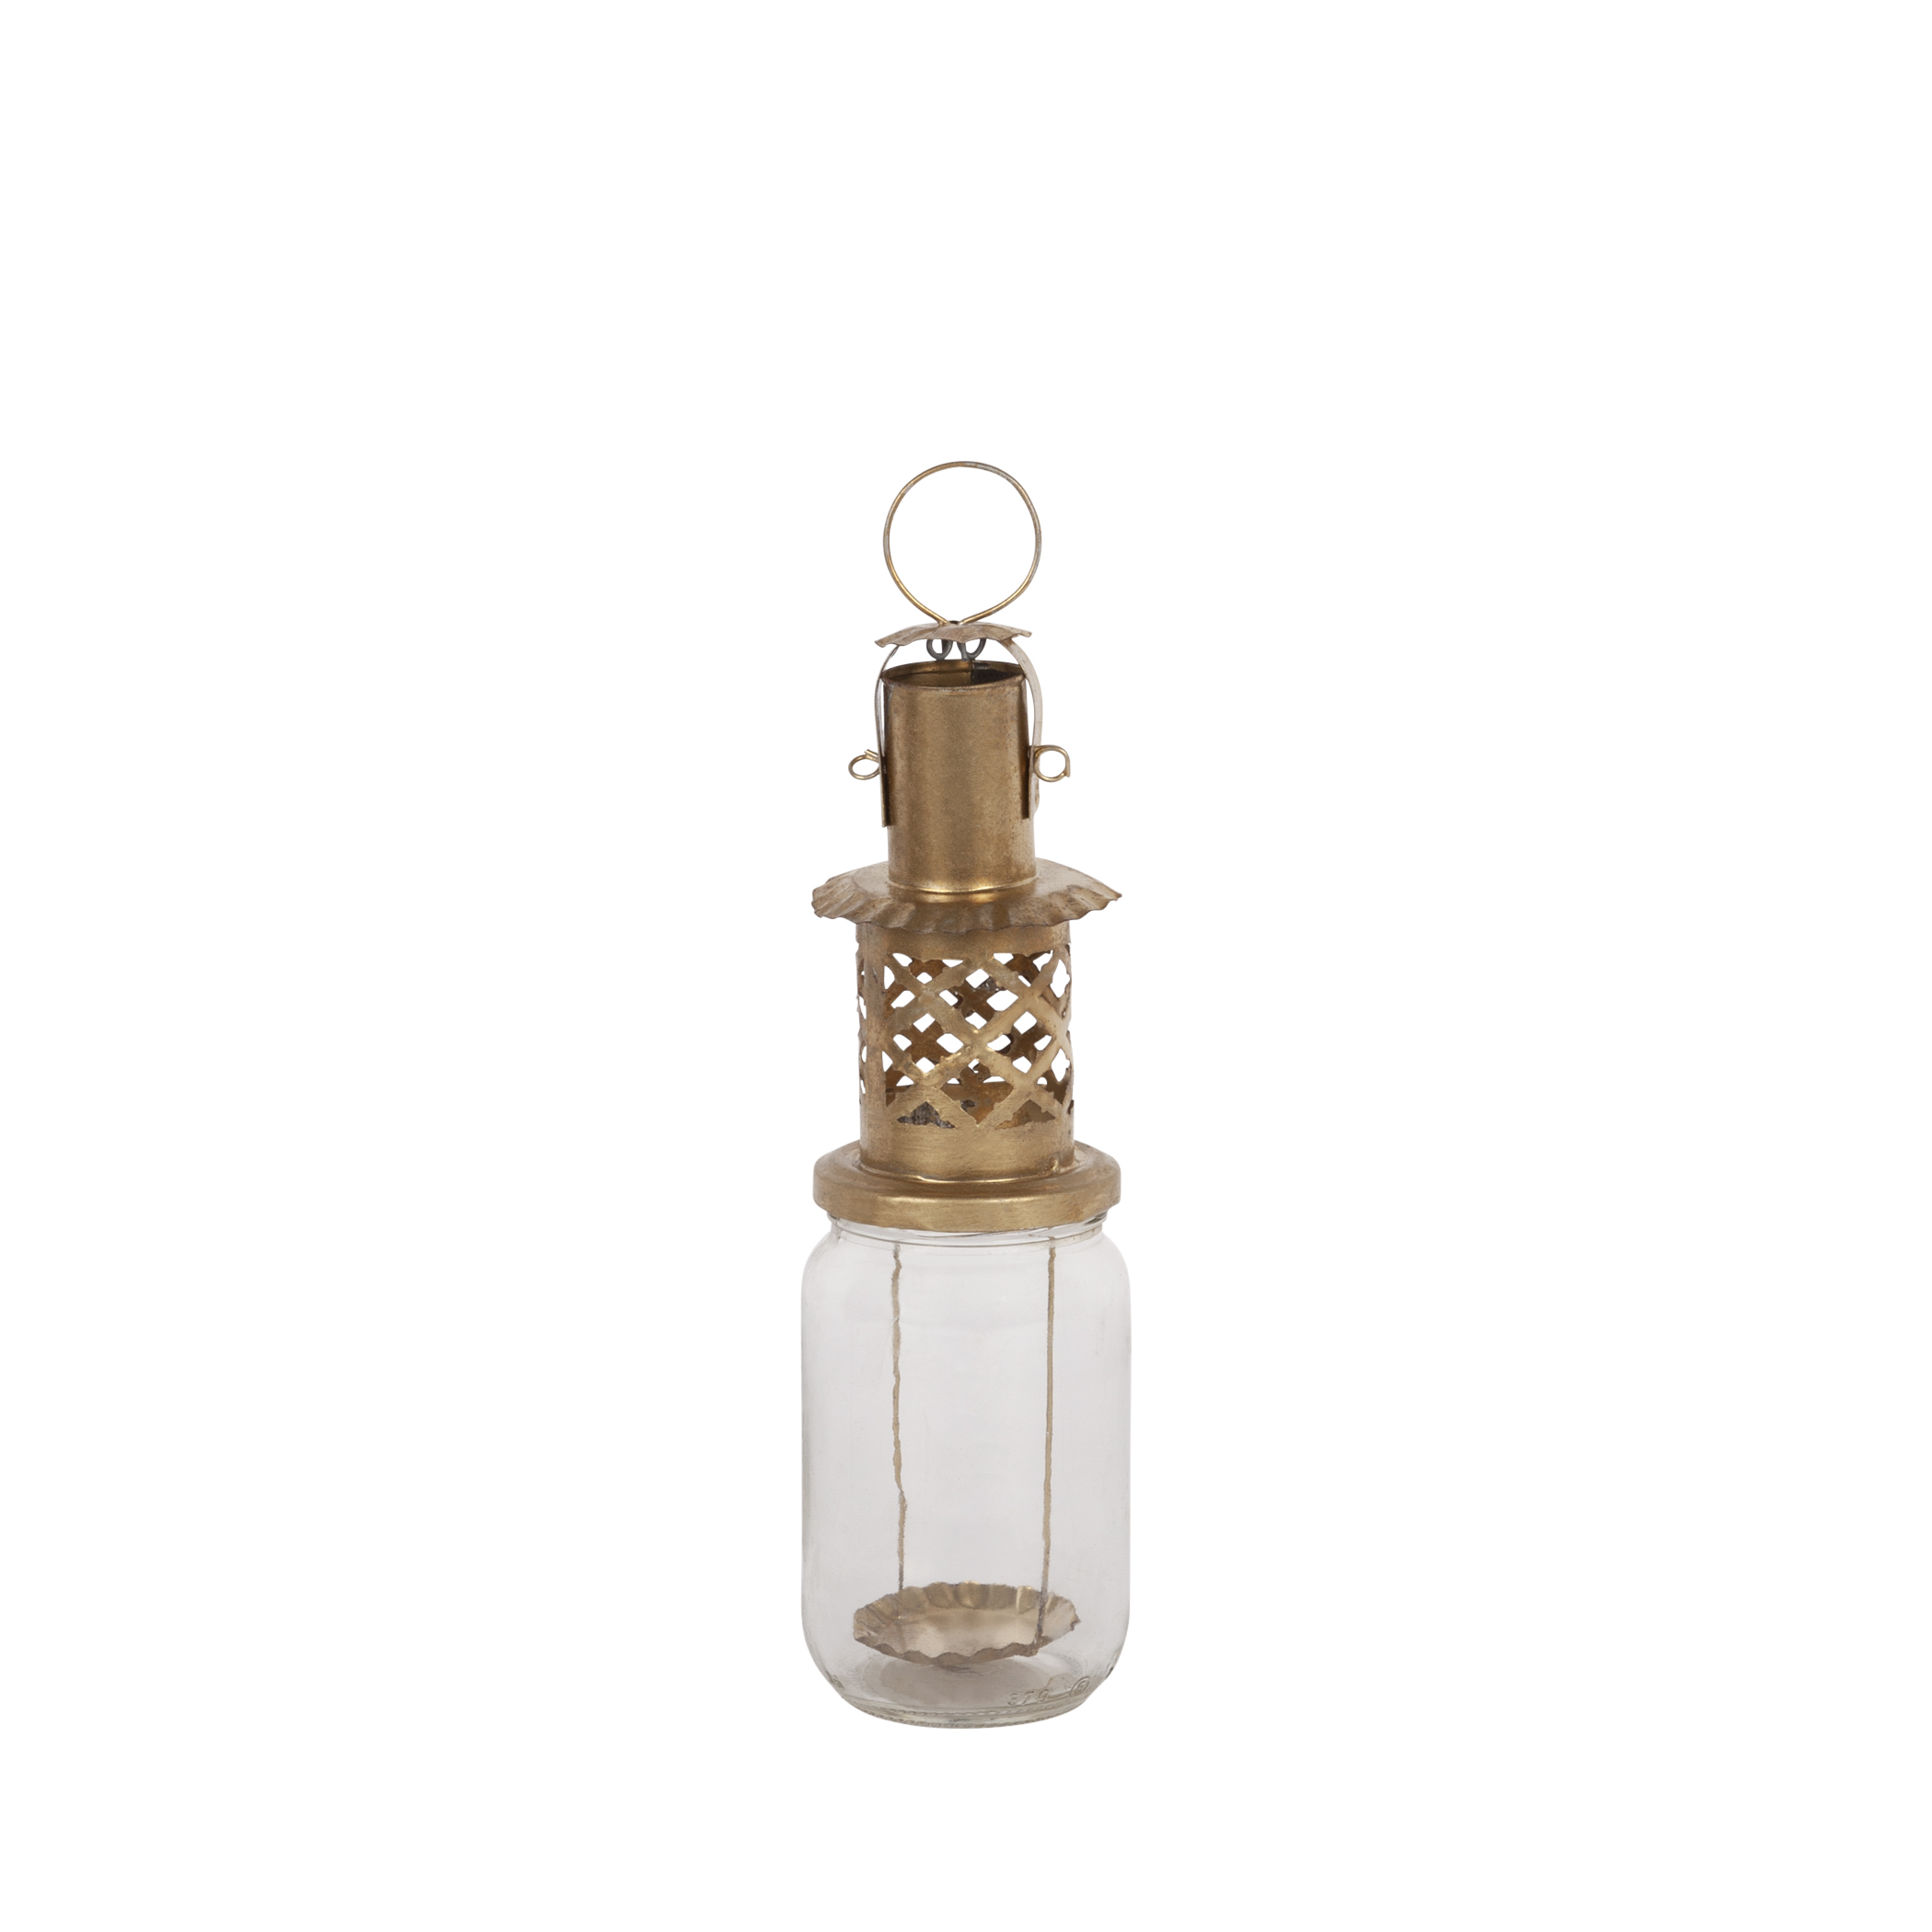 Household Hardware Lantern Confiture - GOLD S